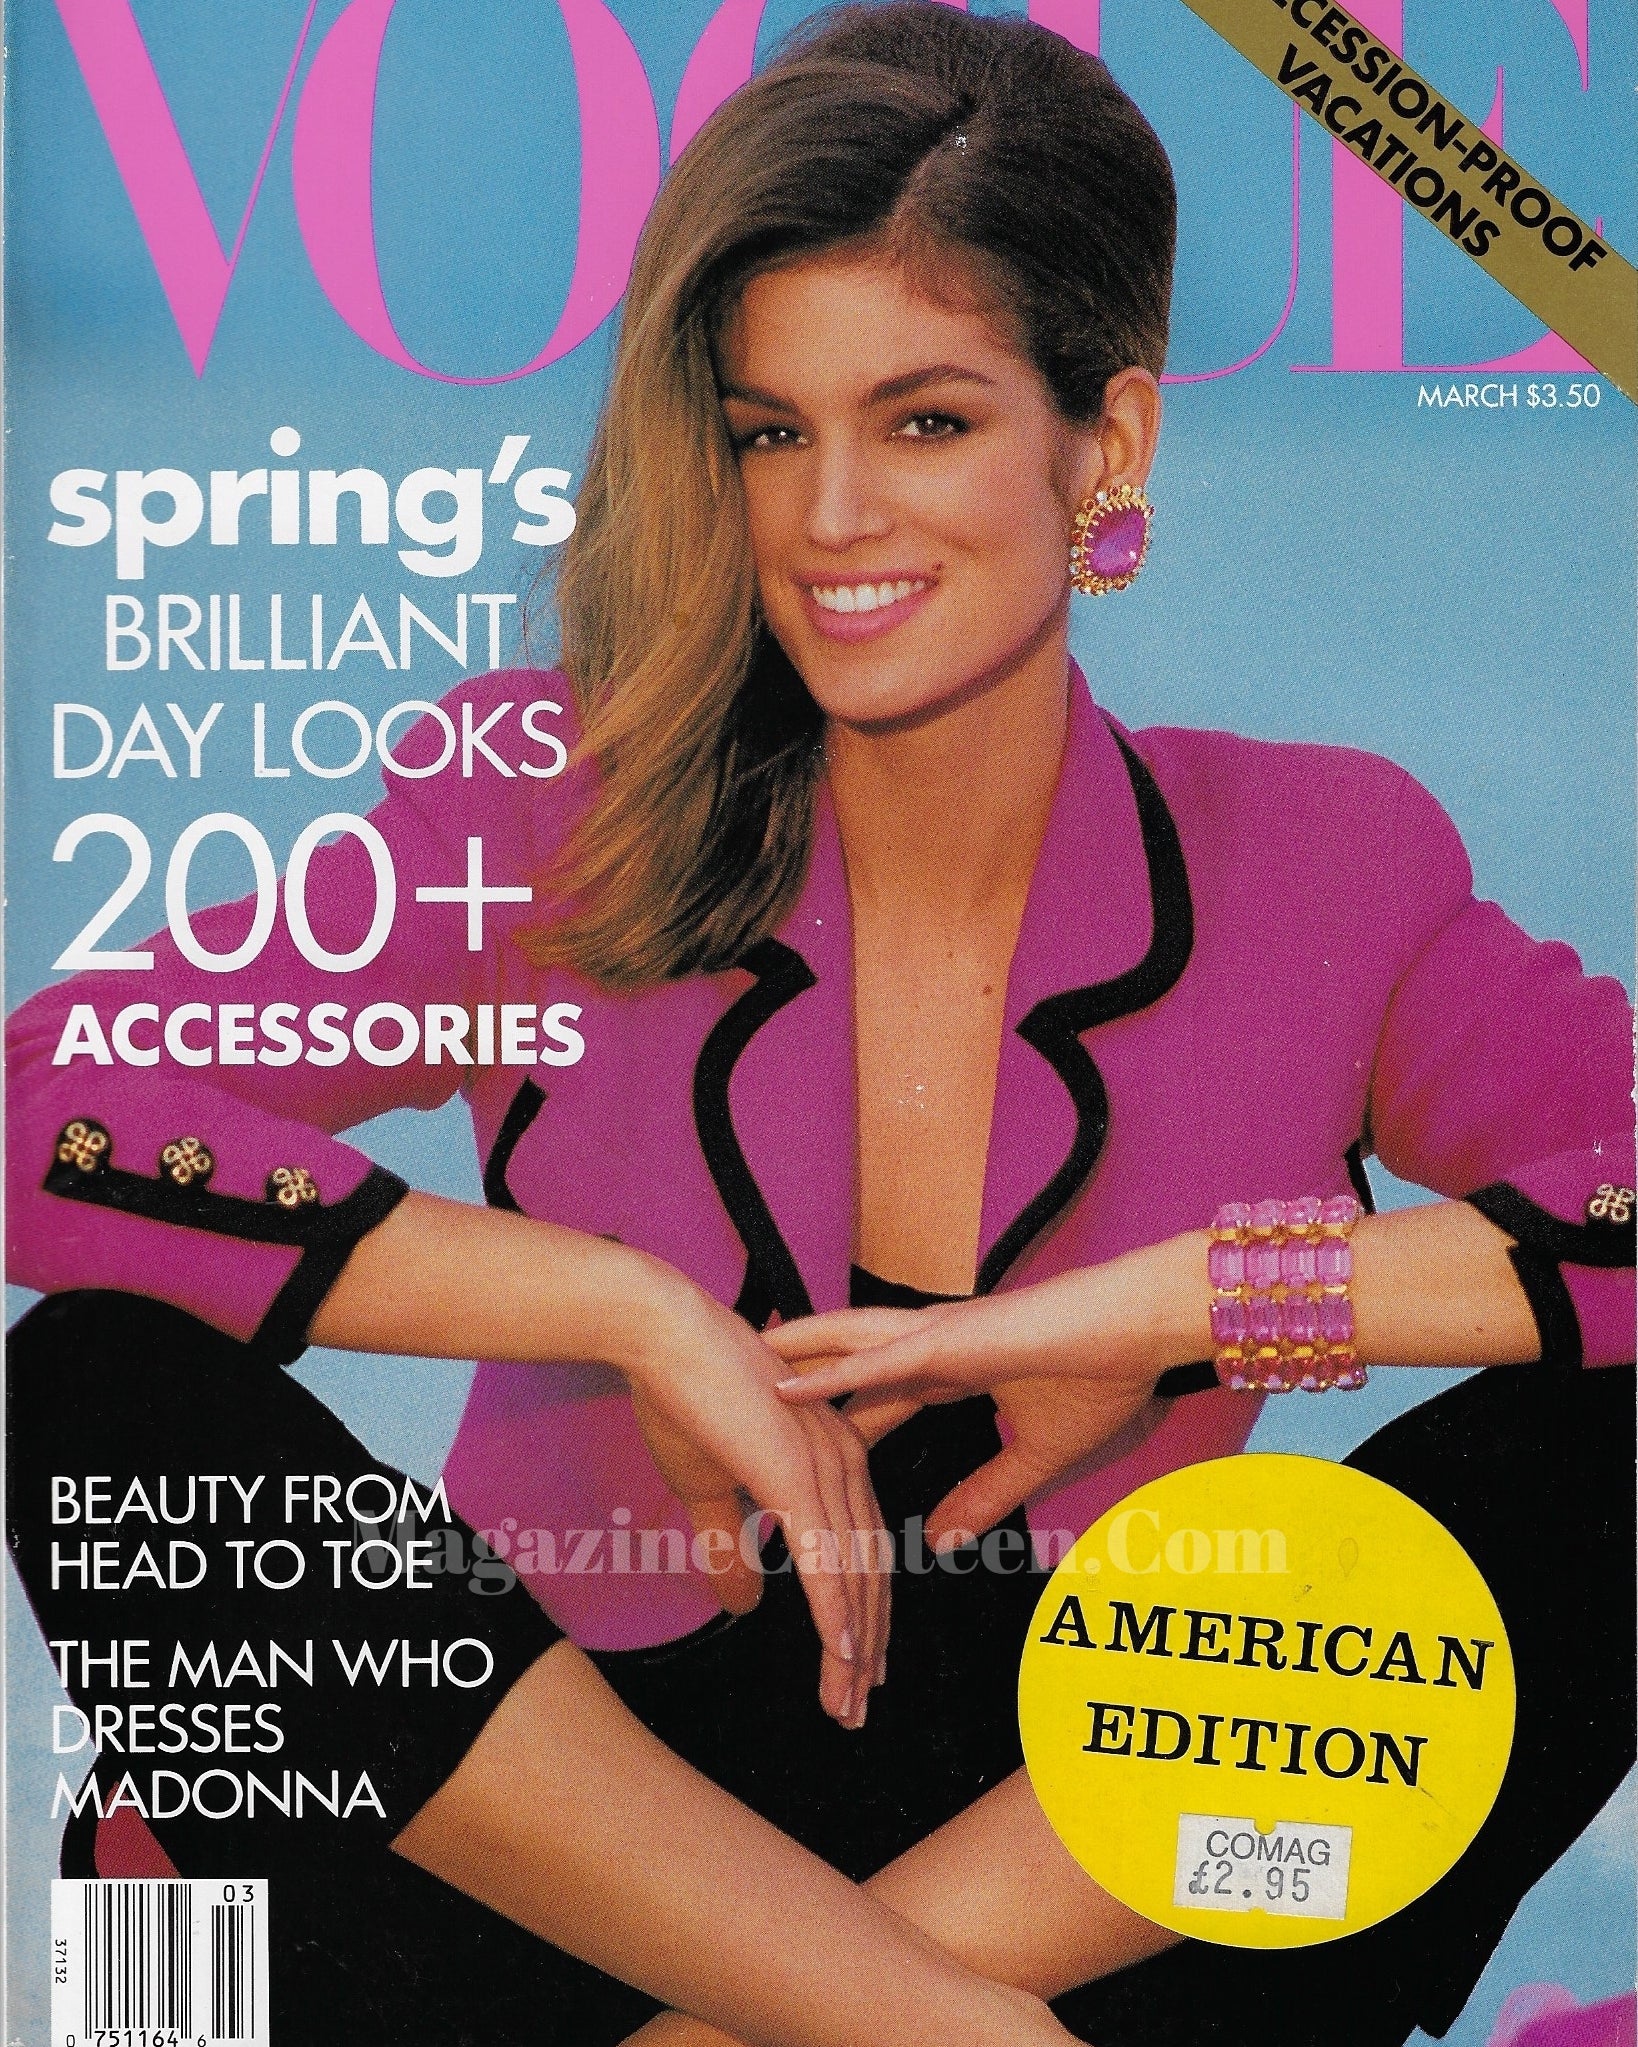 Vogue USA Magazine March 1991 - Cindy Crawford